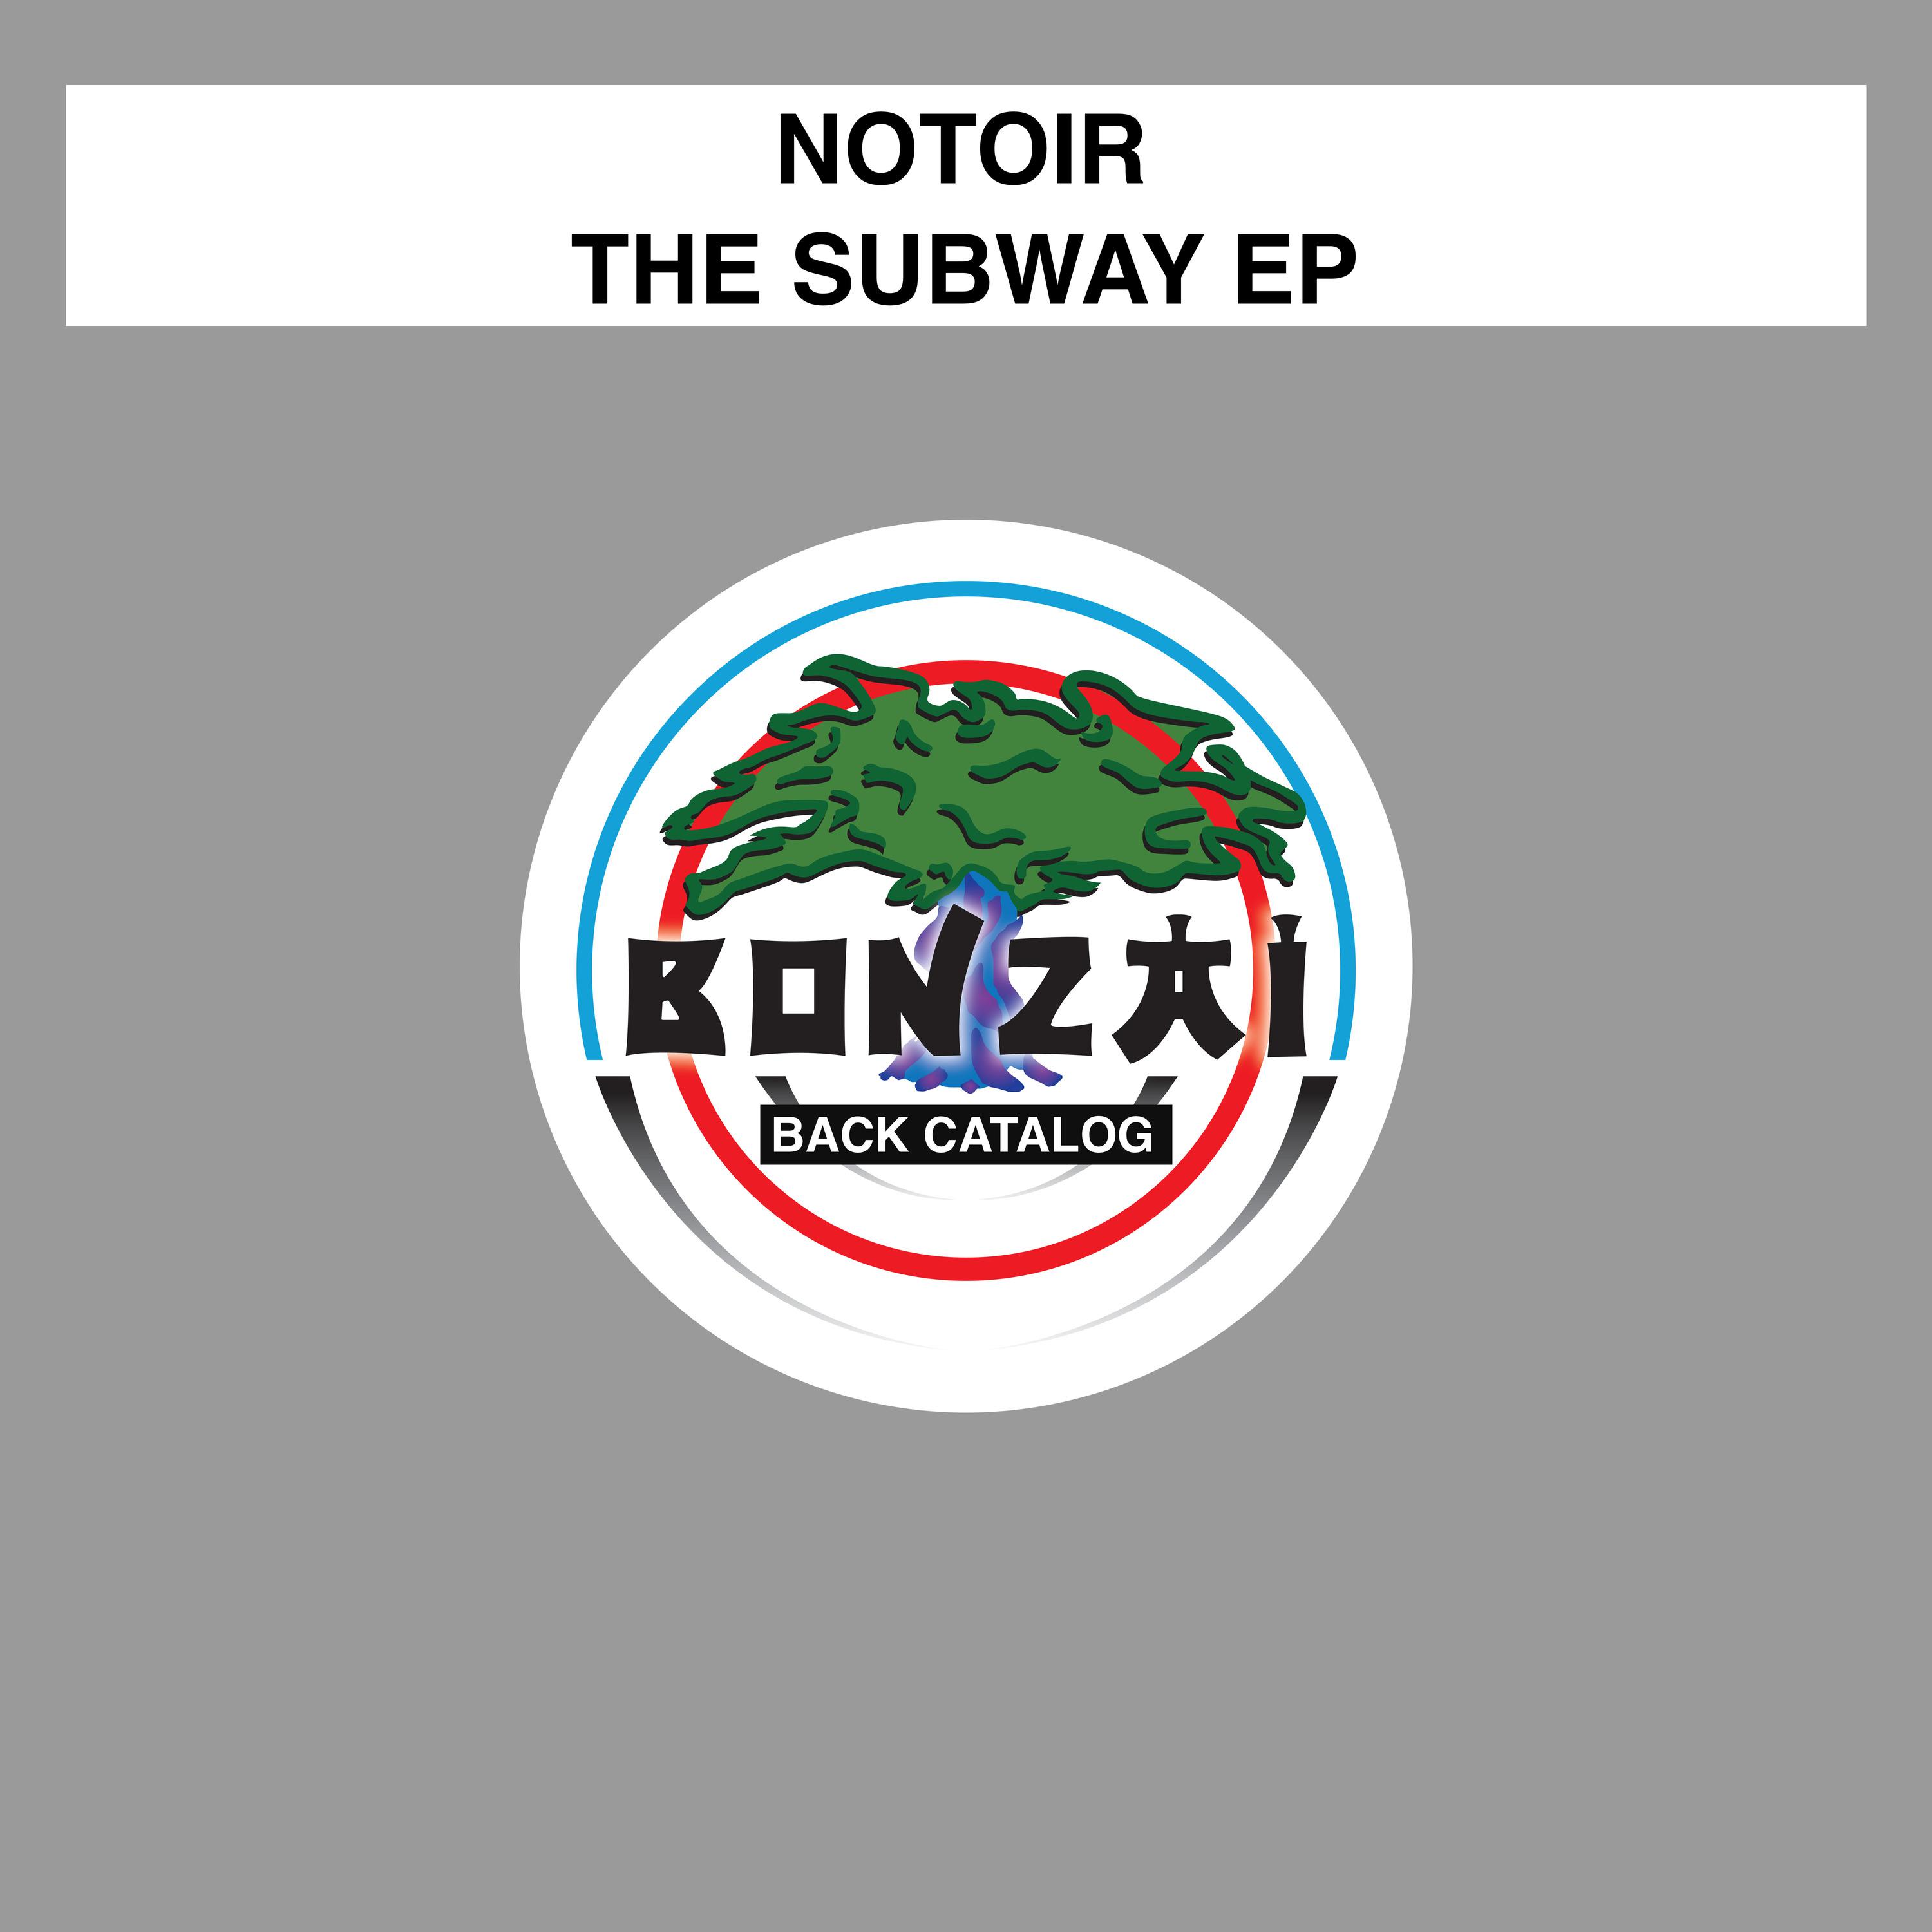 The Subway EP